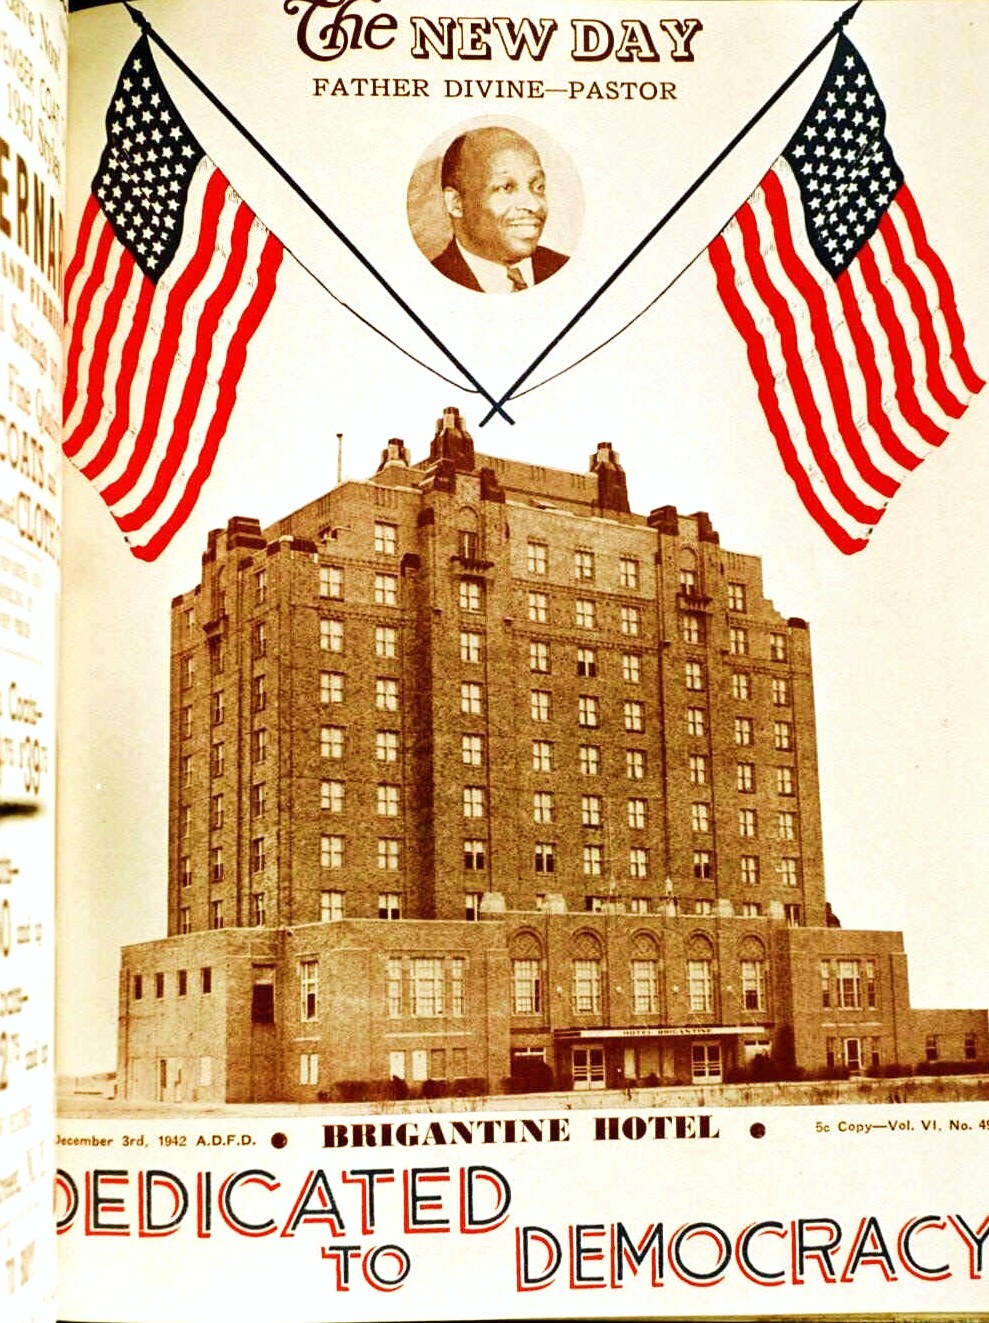 The Brigantine Hotel, Dedicated to Democracy.